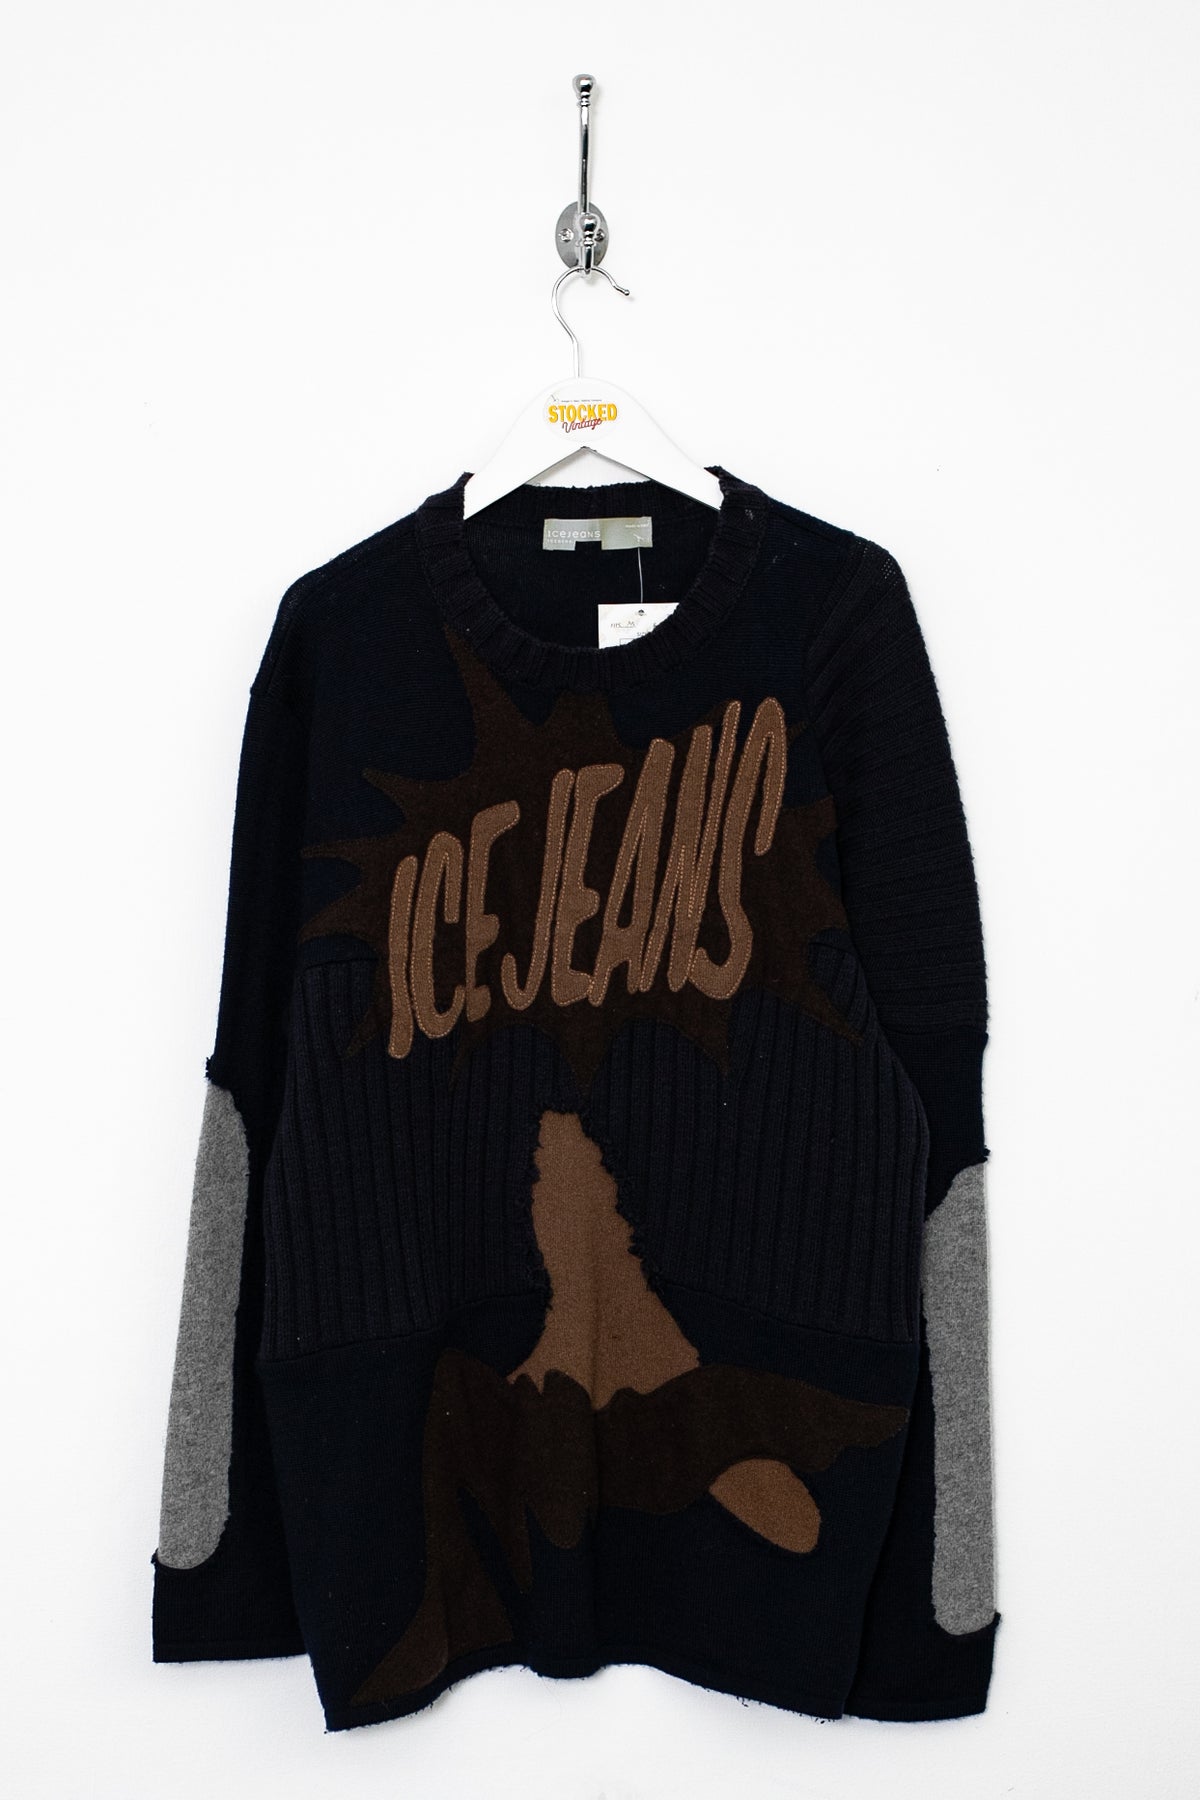 00s Iceberg Jeans Knit Jumper (M)